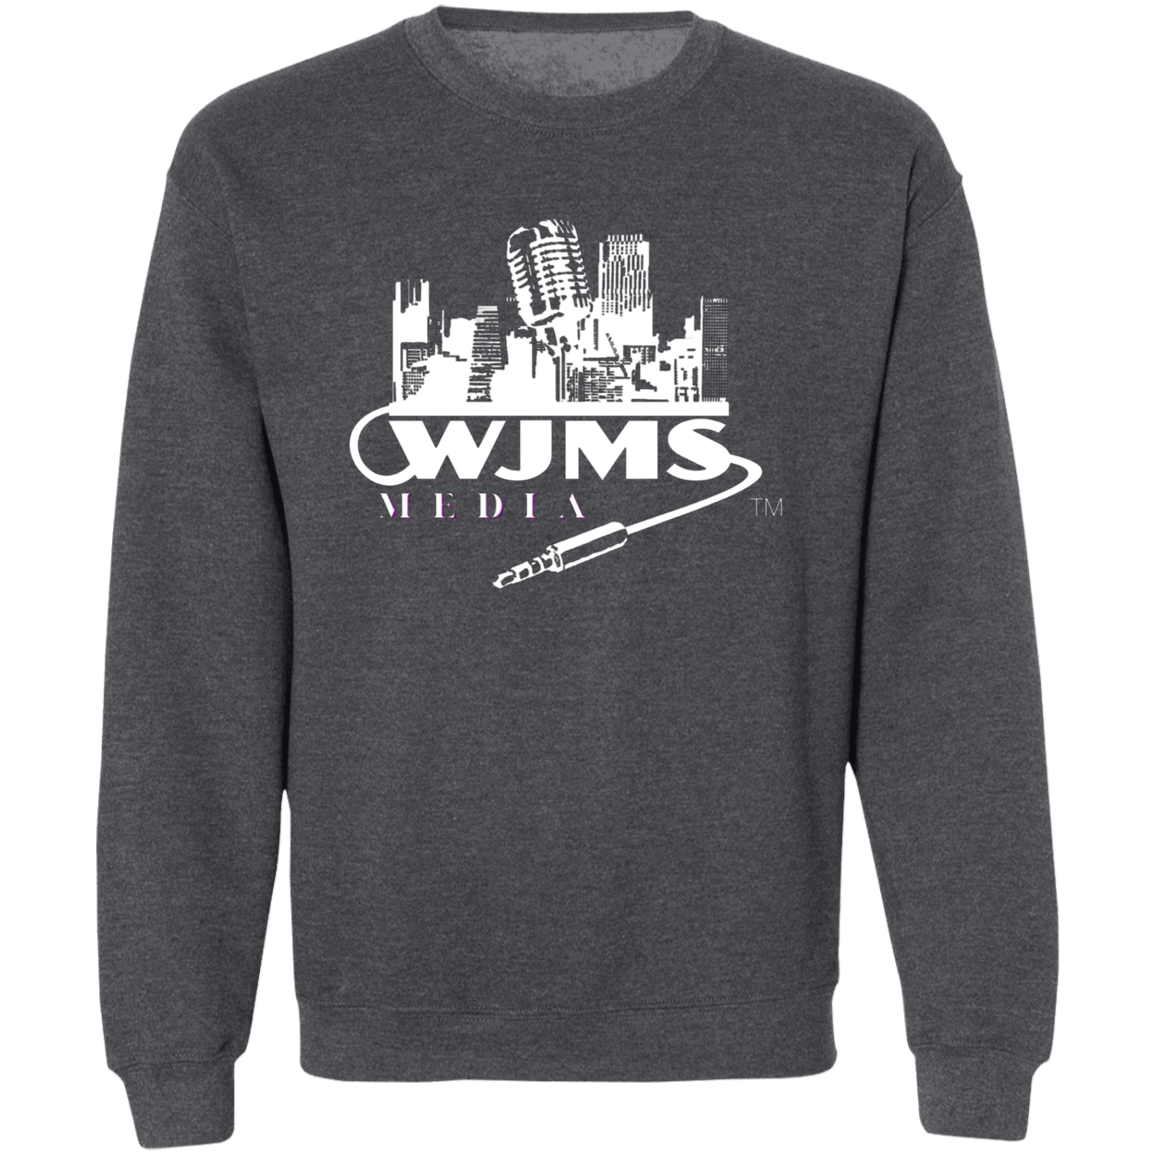 WJMS Pullover Crewneck Sweatshirt 8 oz (Closeout)